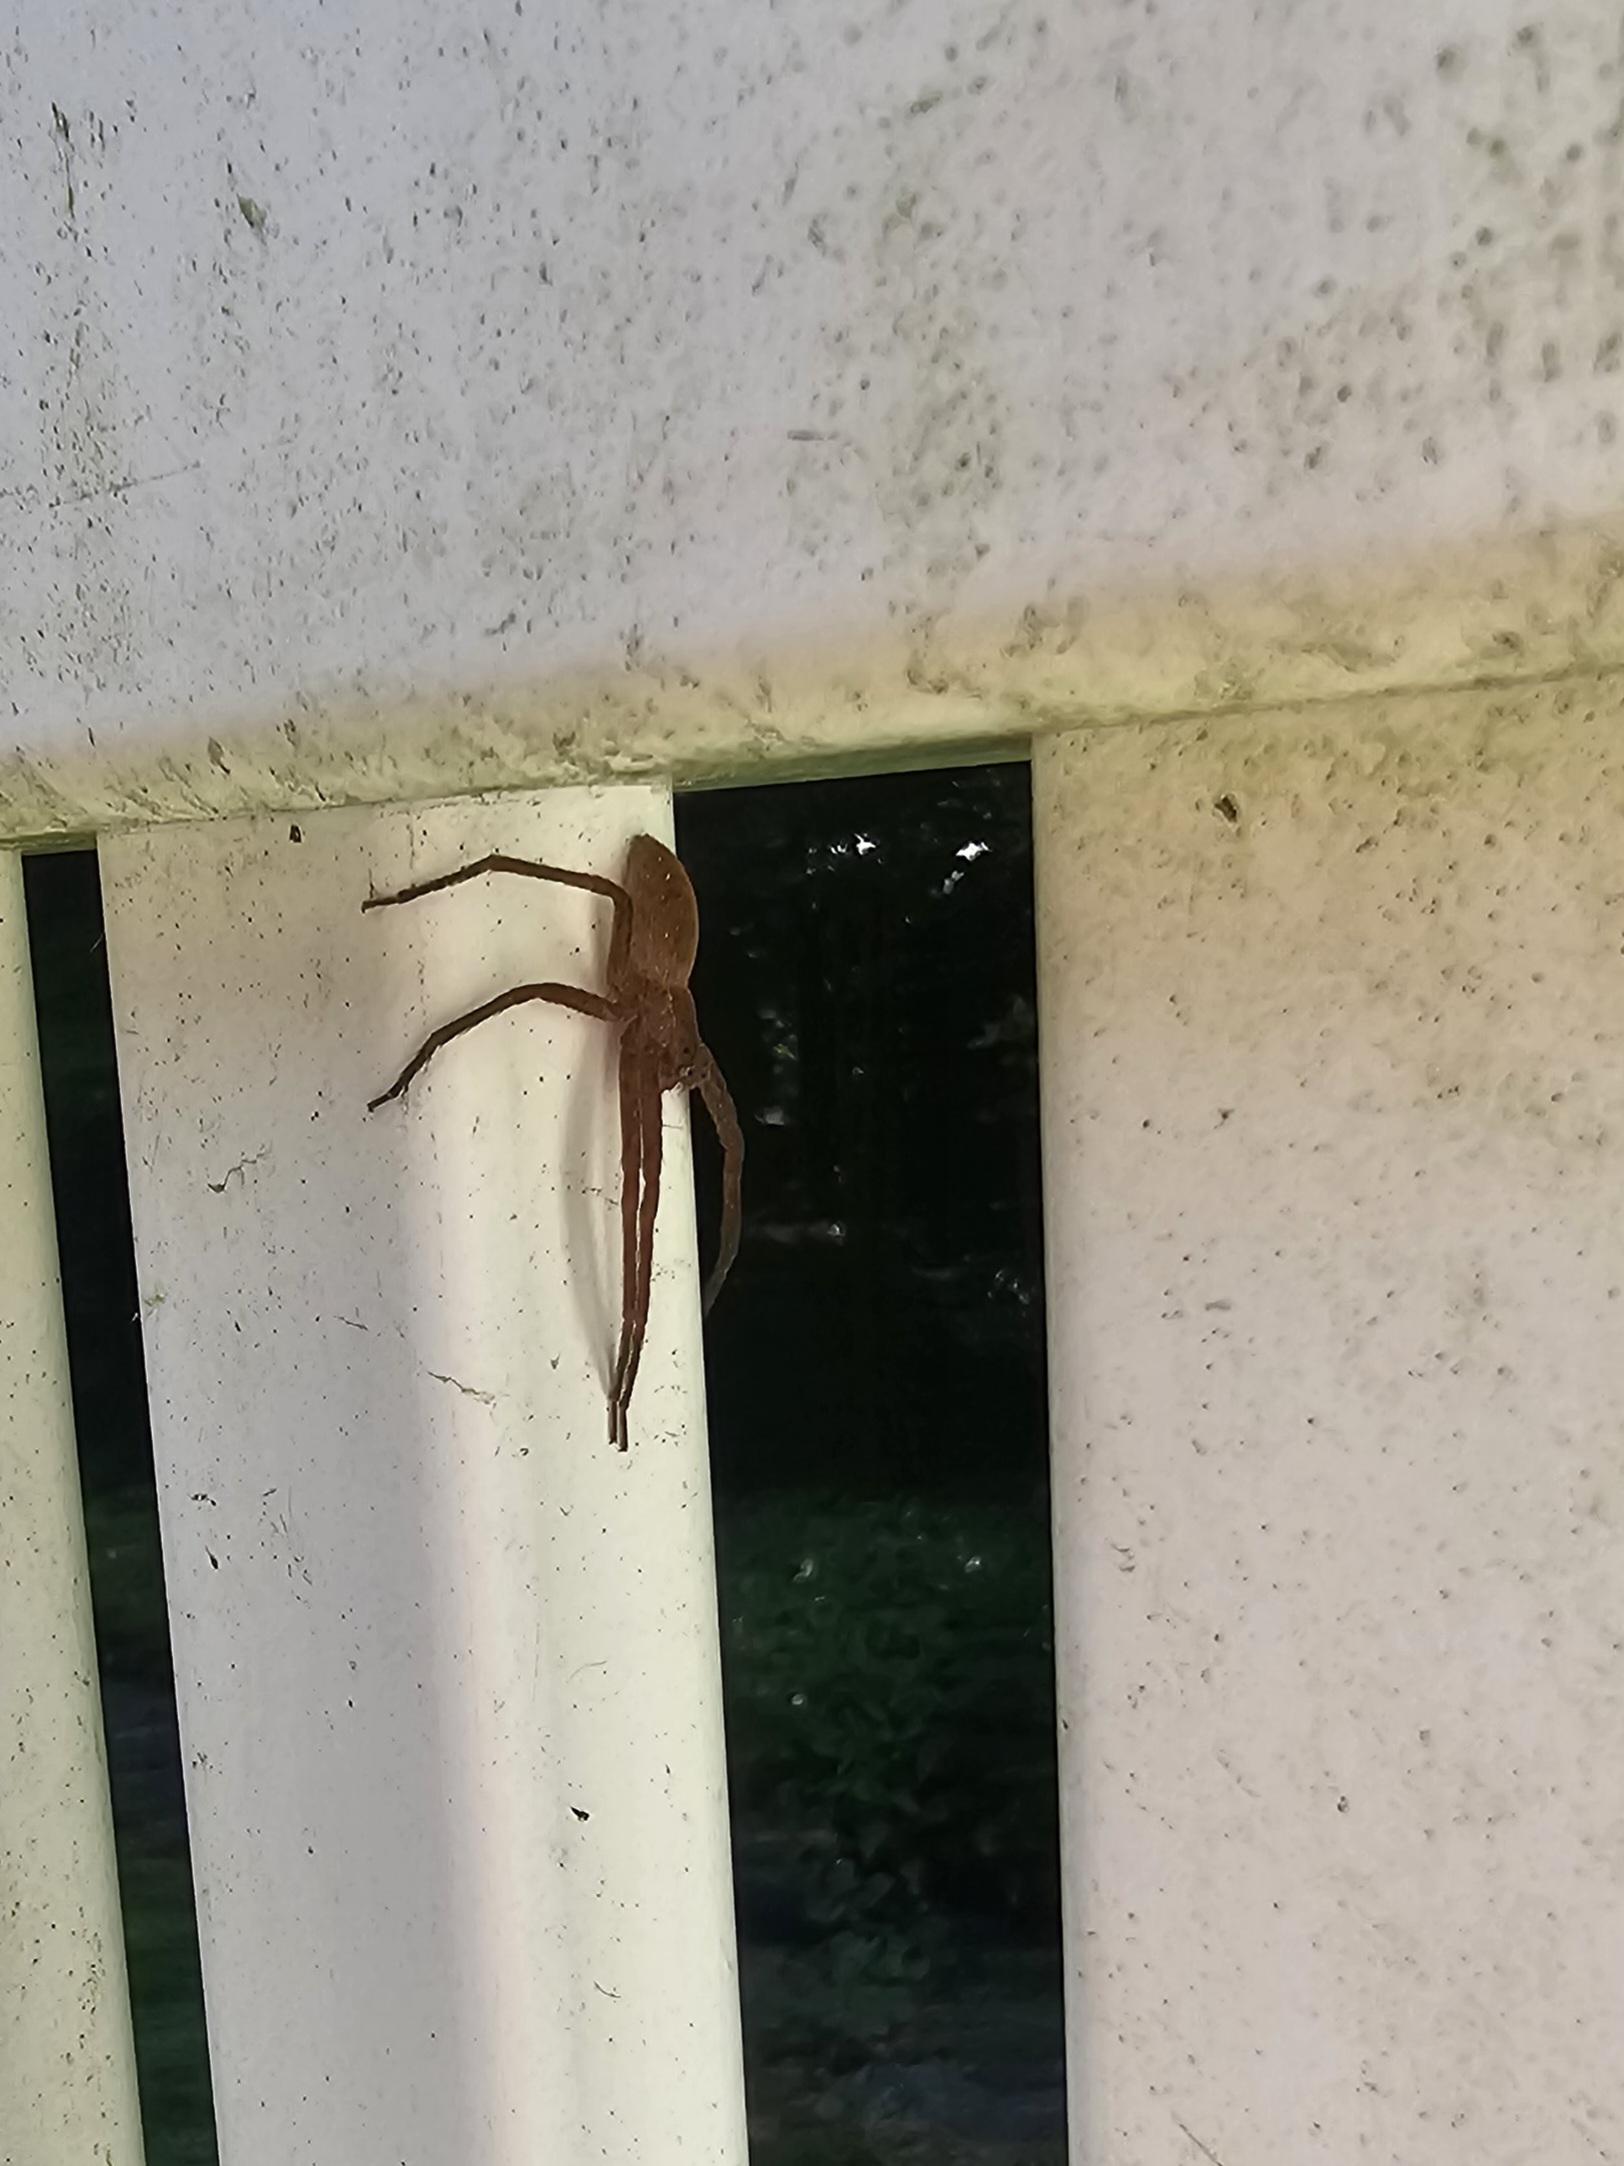 Picture of Pisaurina mira (Nursery Web Spider)